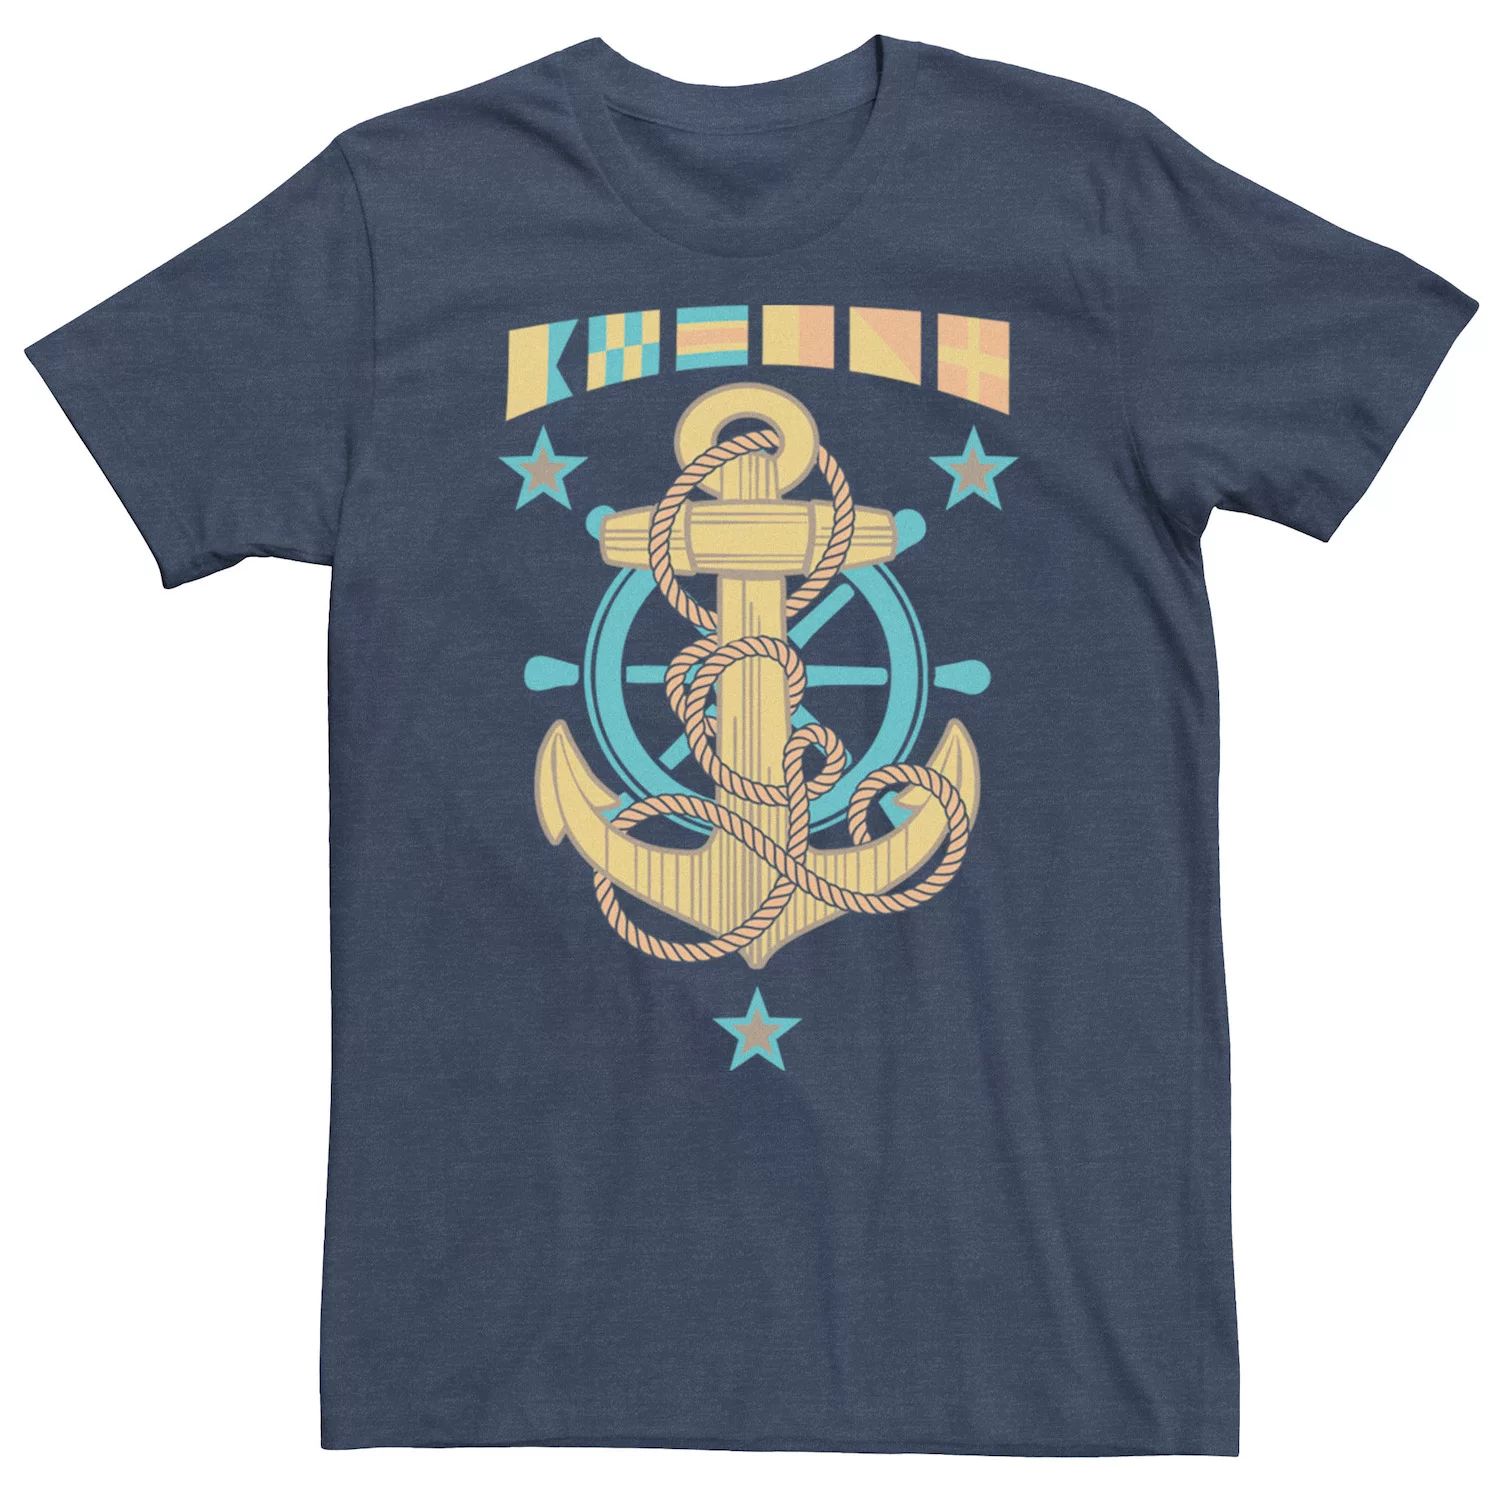 Мужская футболка-коллаж в морском стиле с якорем Licensed Character 2 шт женский веревочный браслет с якорем в морском стиле